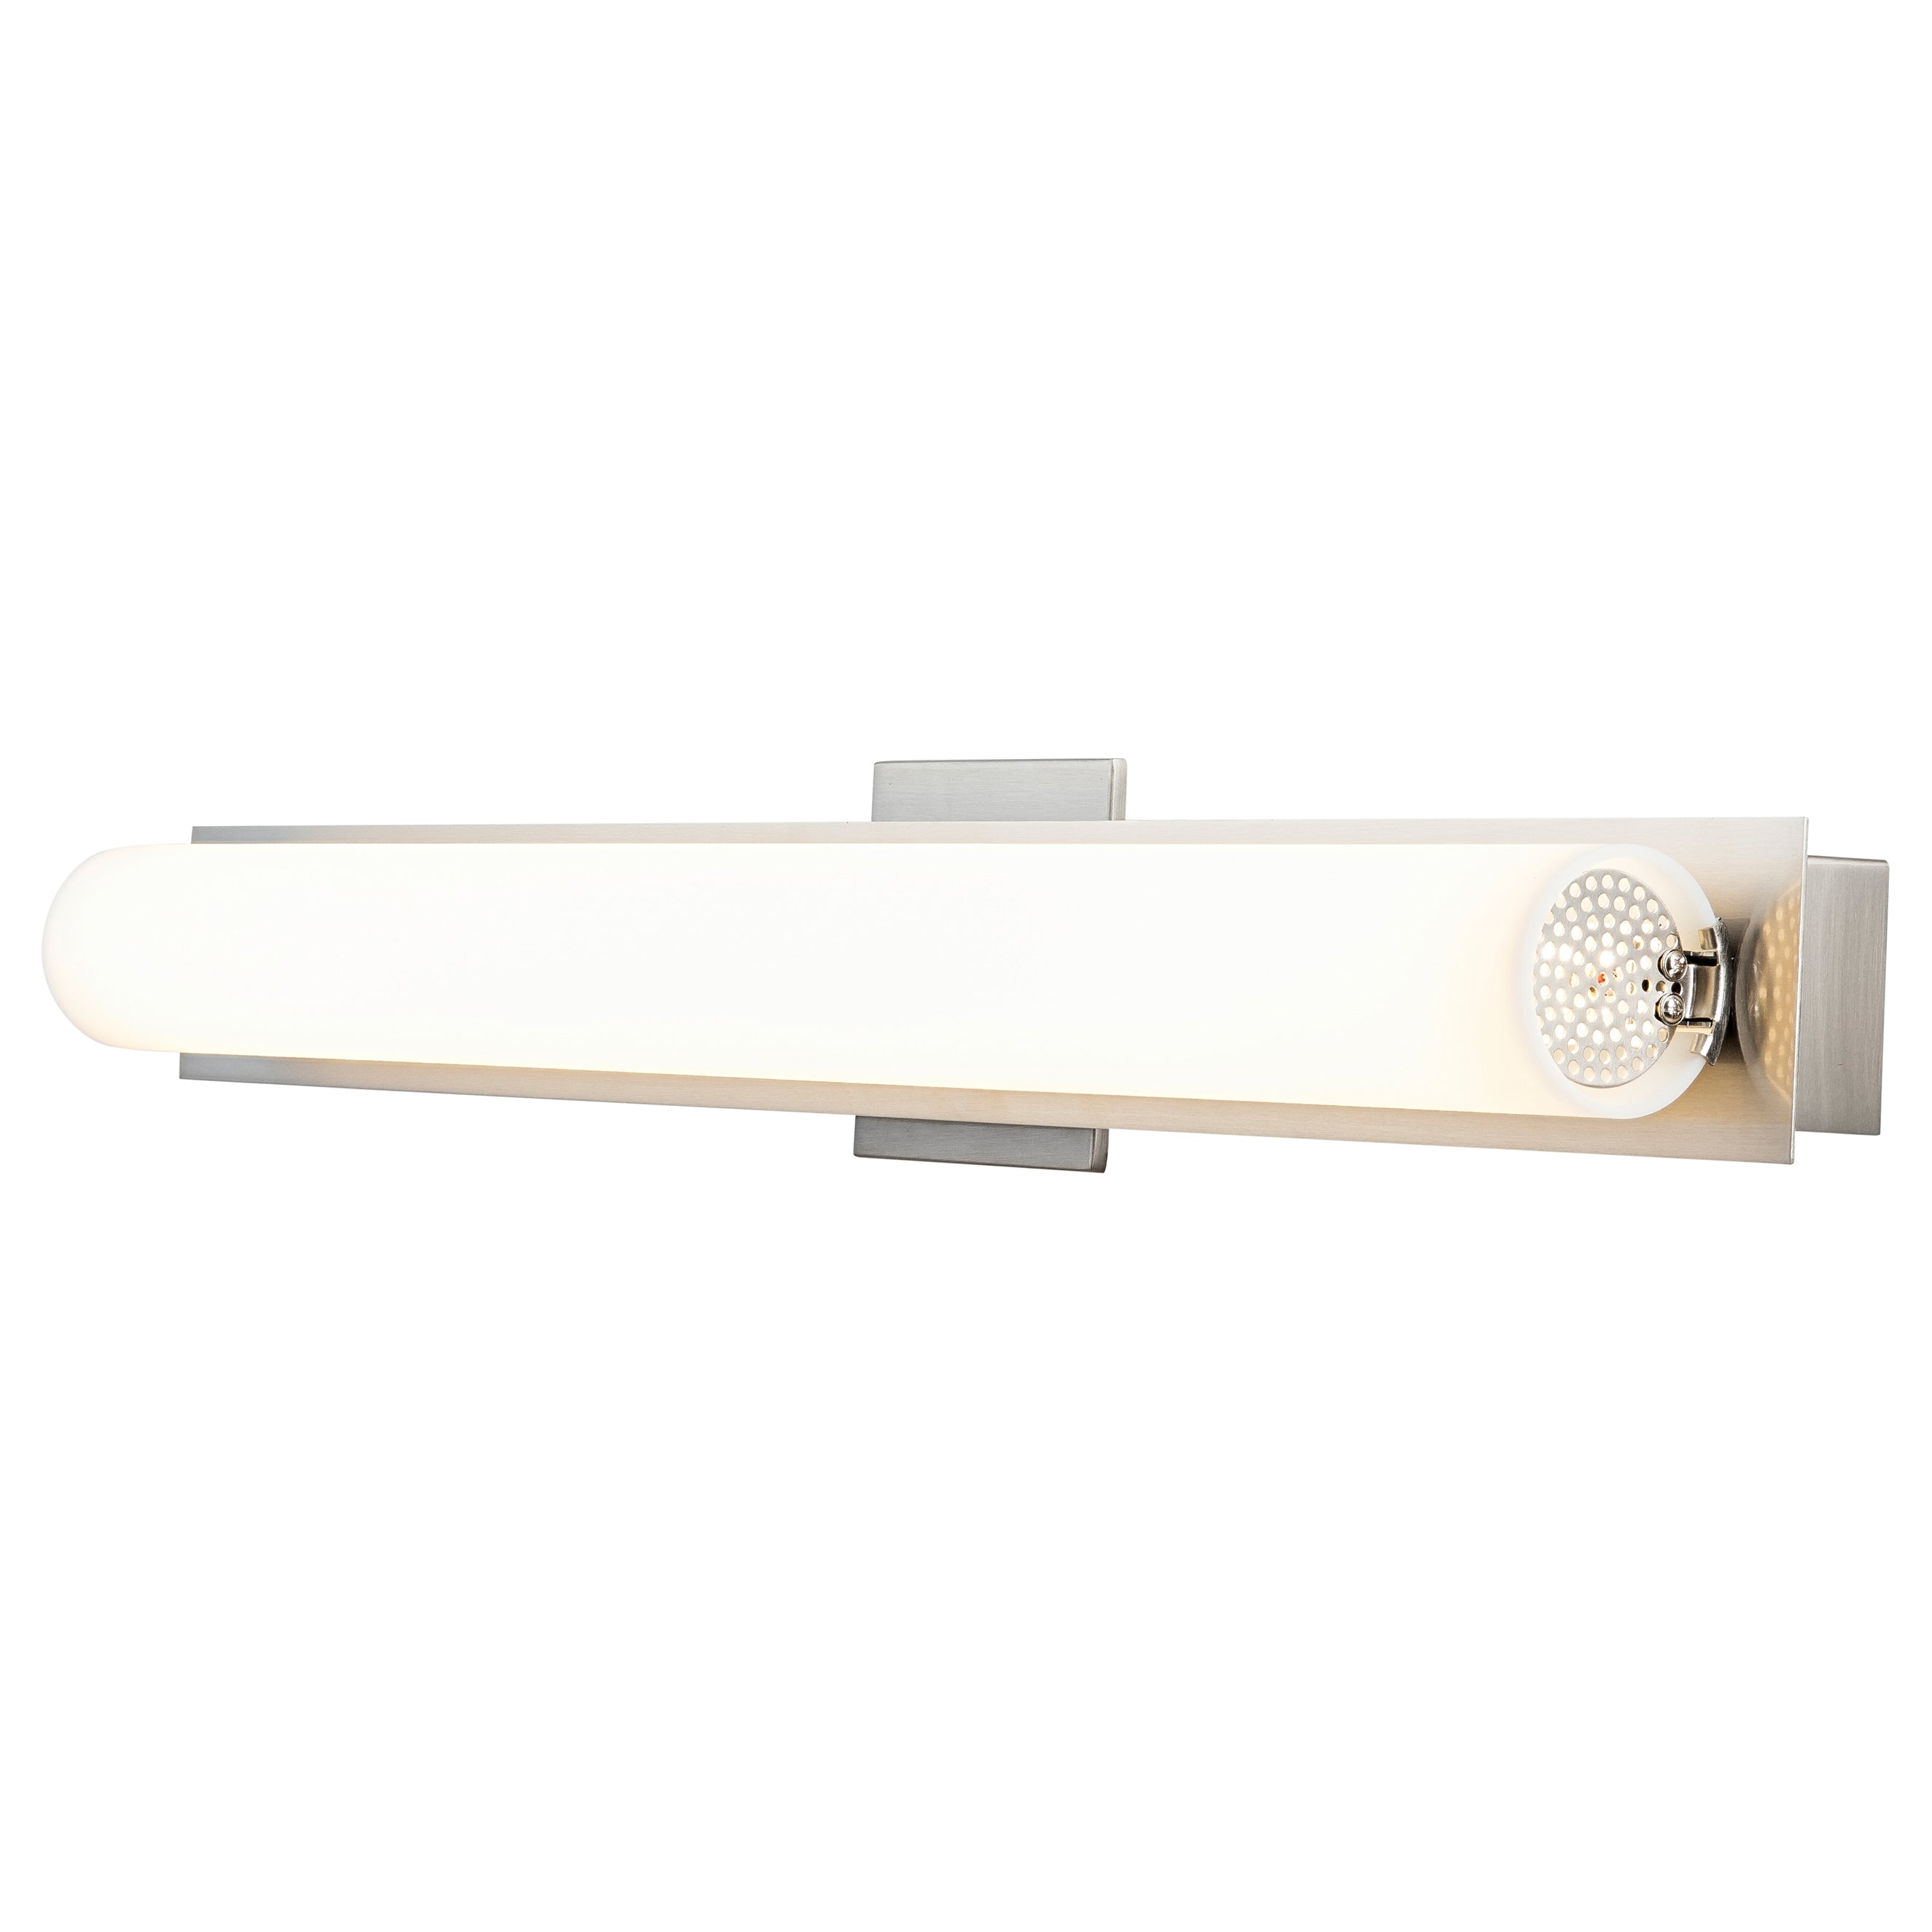 Portico 24 inch LED Bathroom Vanity Light, Integrated LED Light